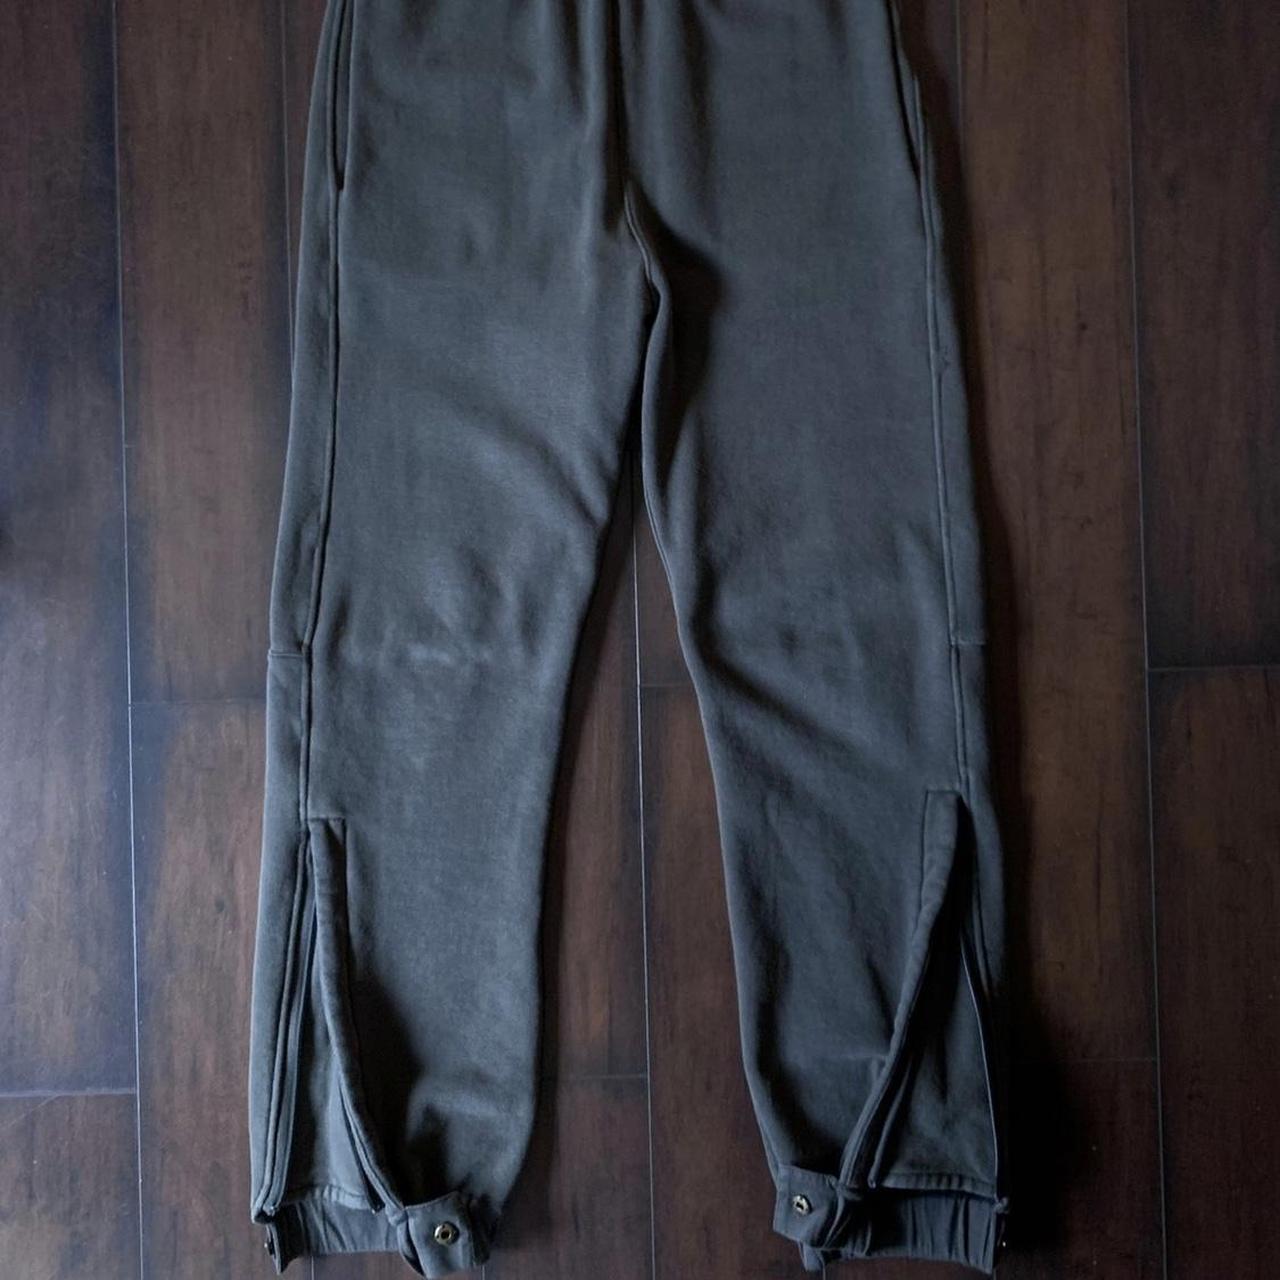 Yeezy Season 1 Sweatpants in olive/grey. Size XS,...